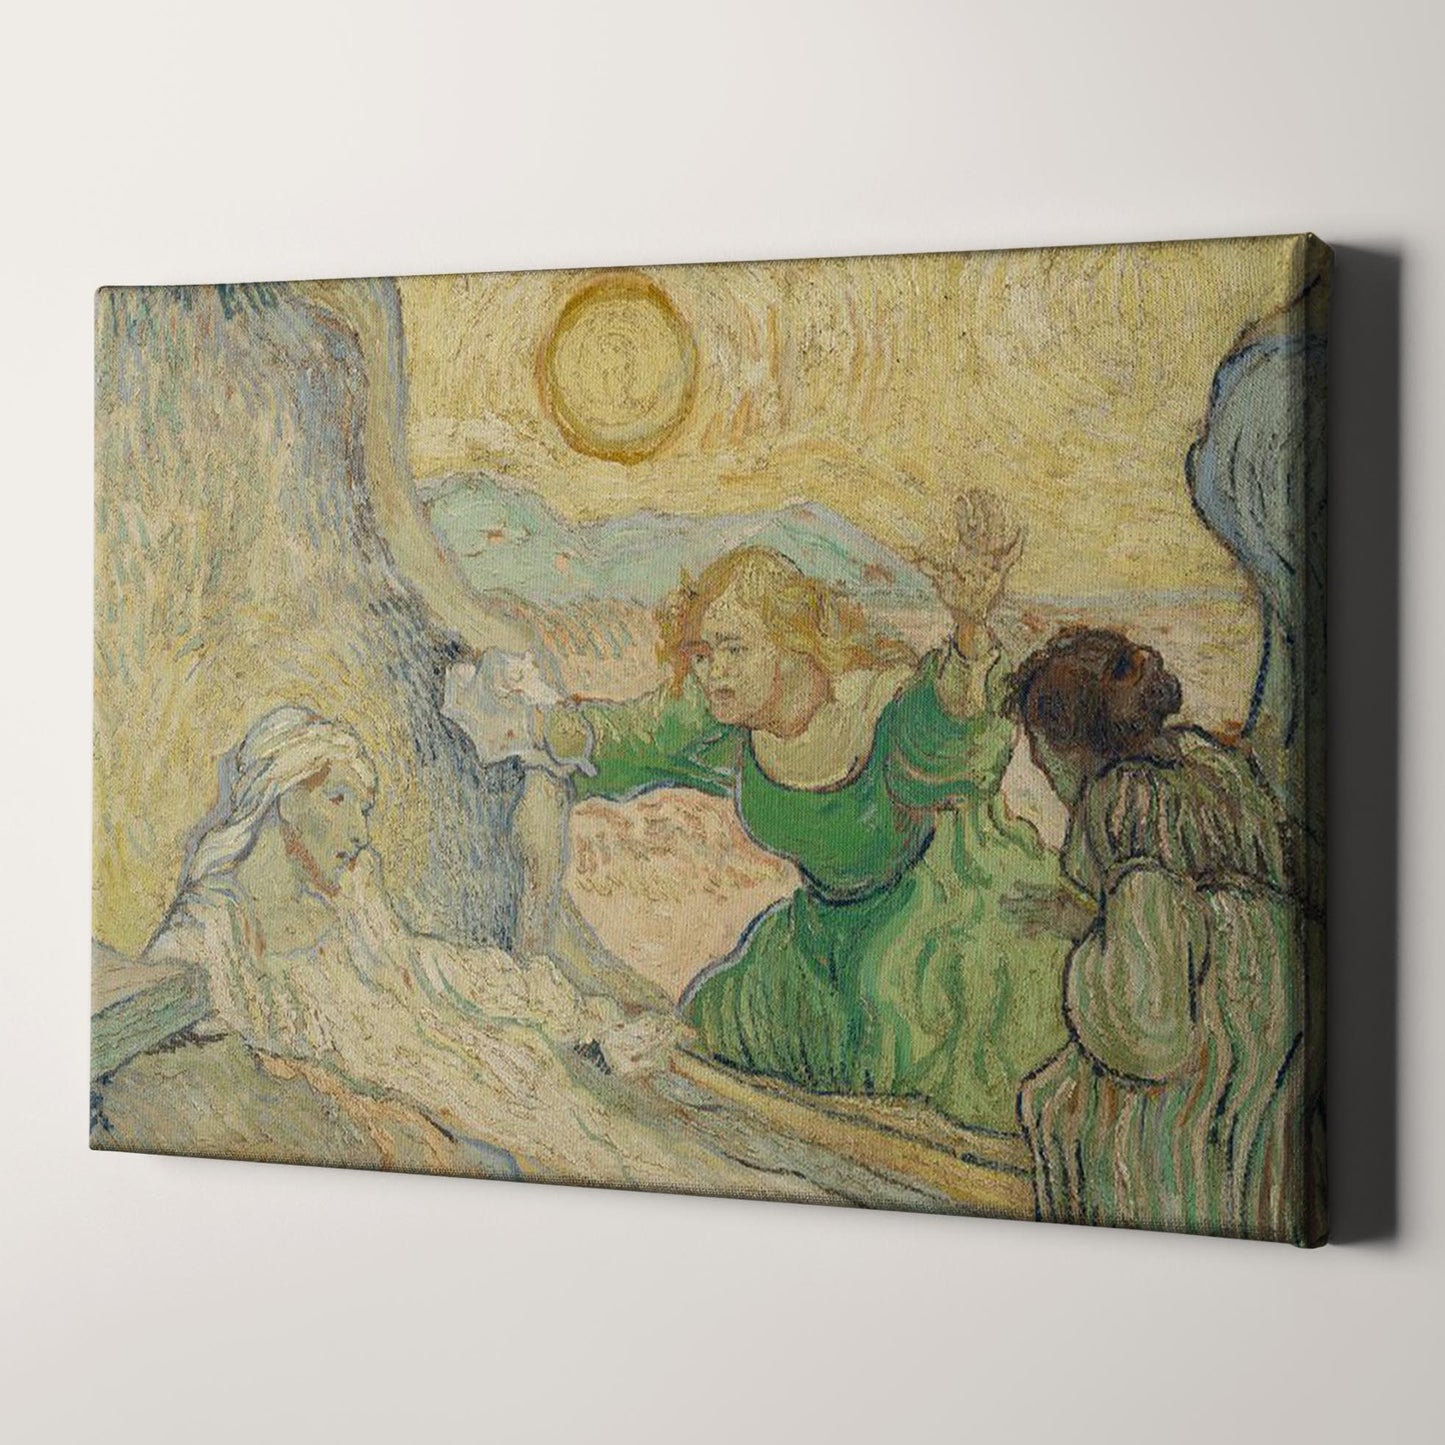 The Raising of Lazarus (1890) by Van Gogh